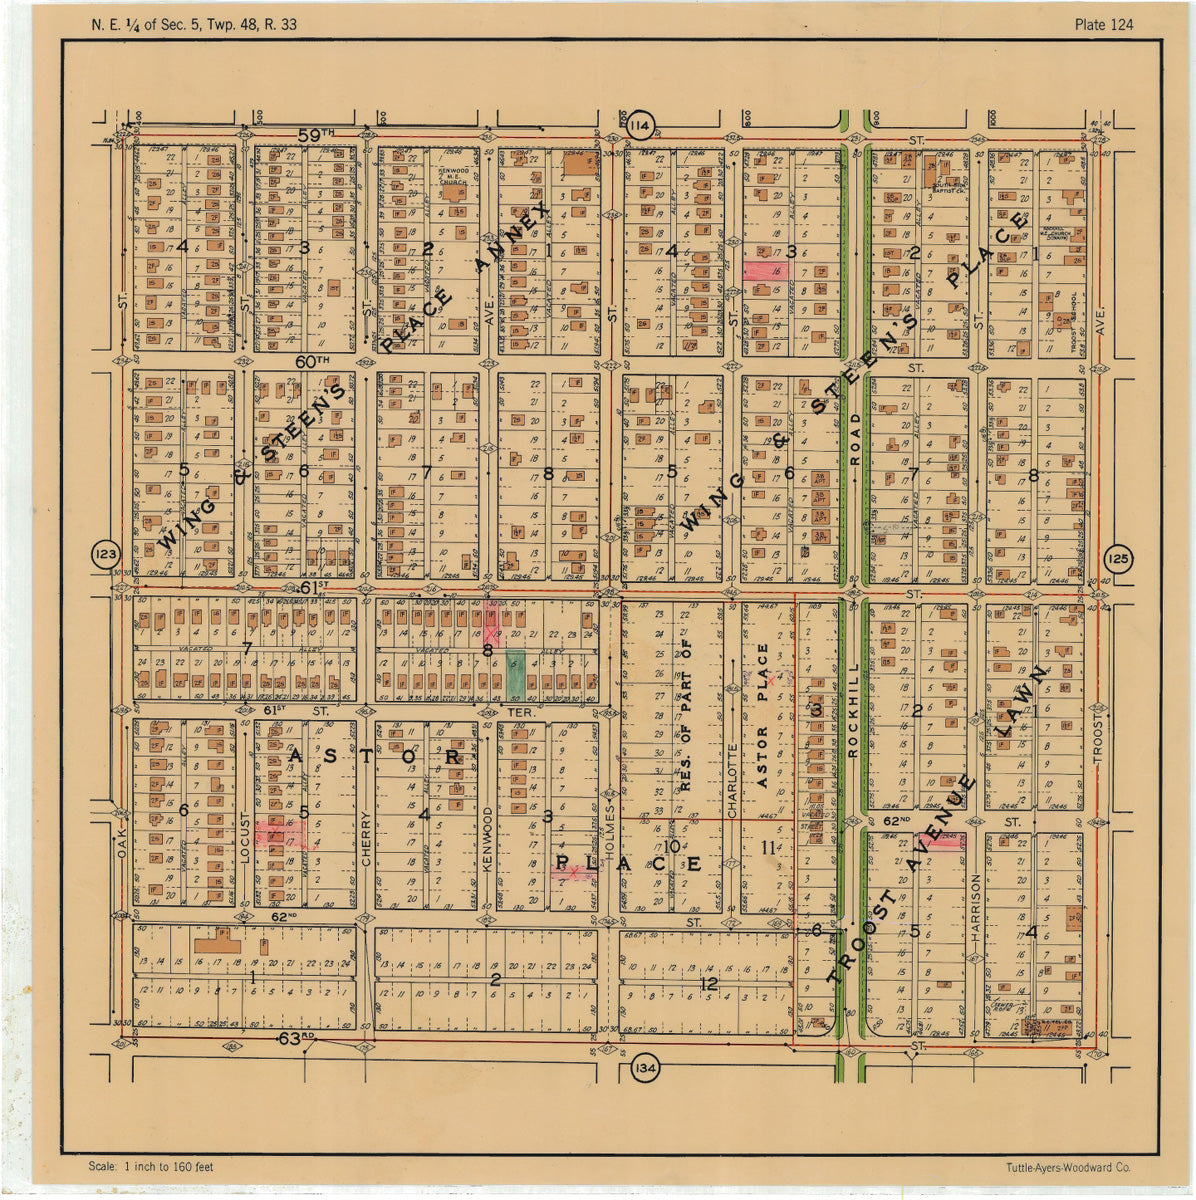 Kansas City 1925 Neighborhood Map - Plate #124 59th-63rd Oak-Troost